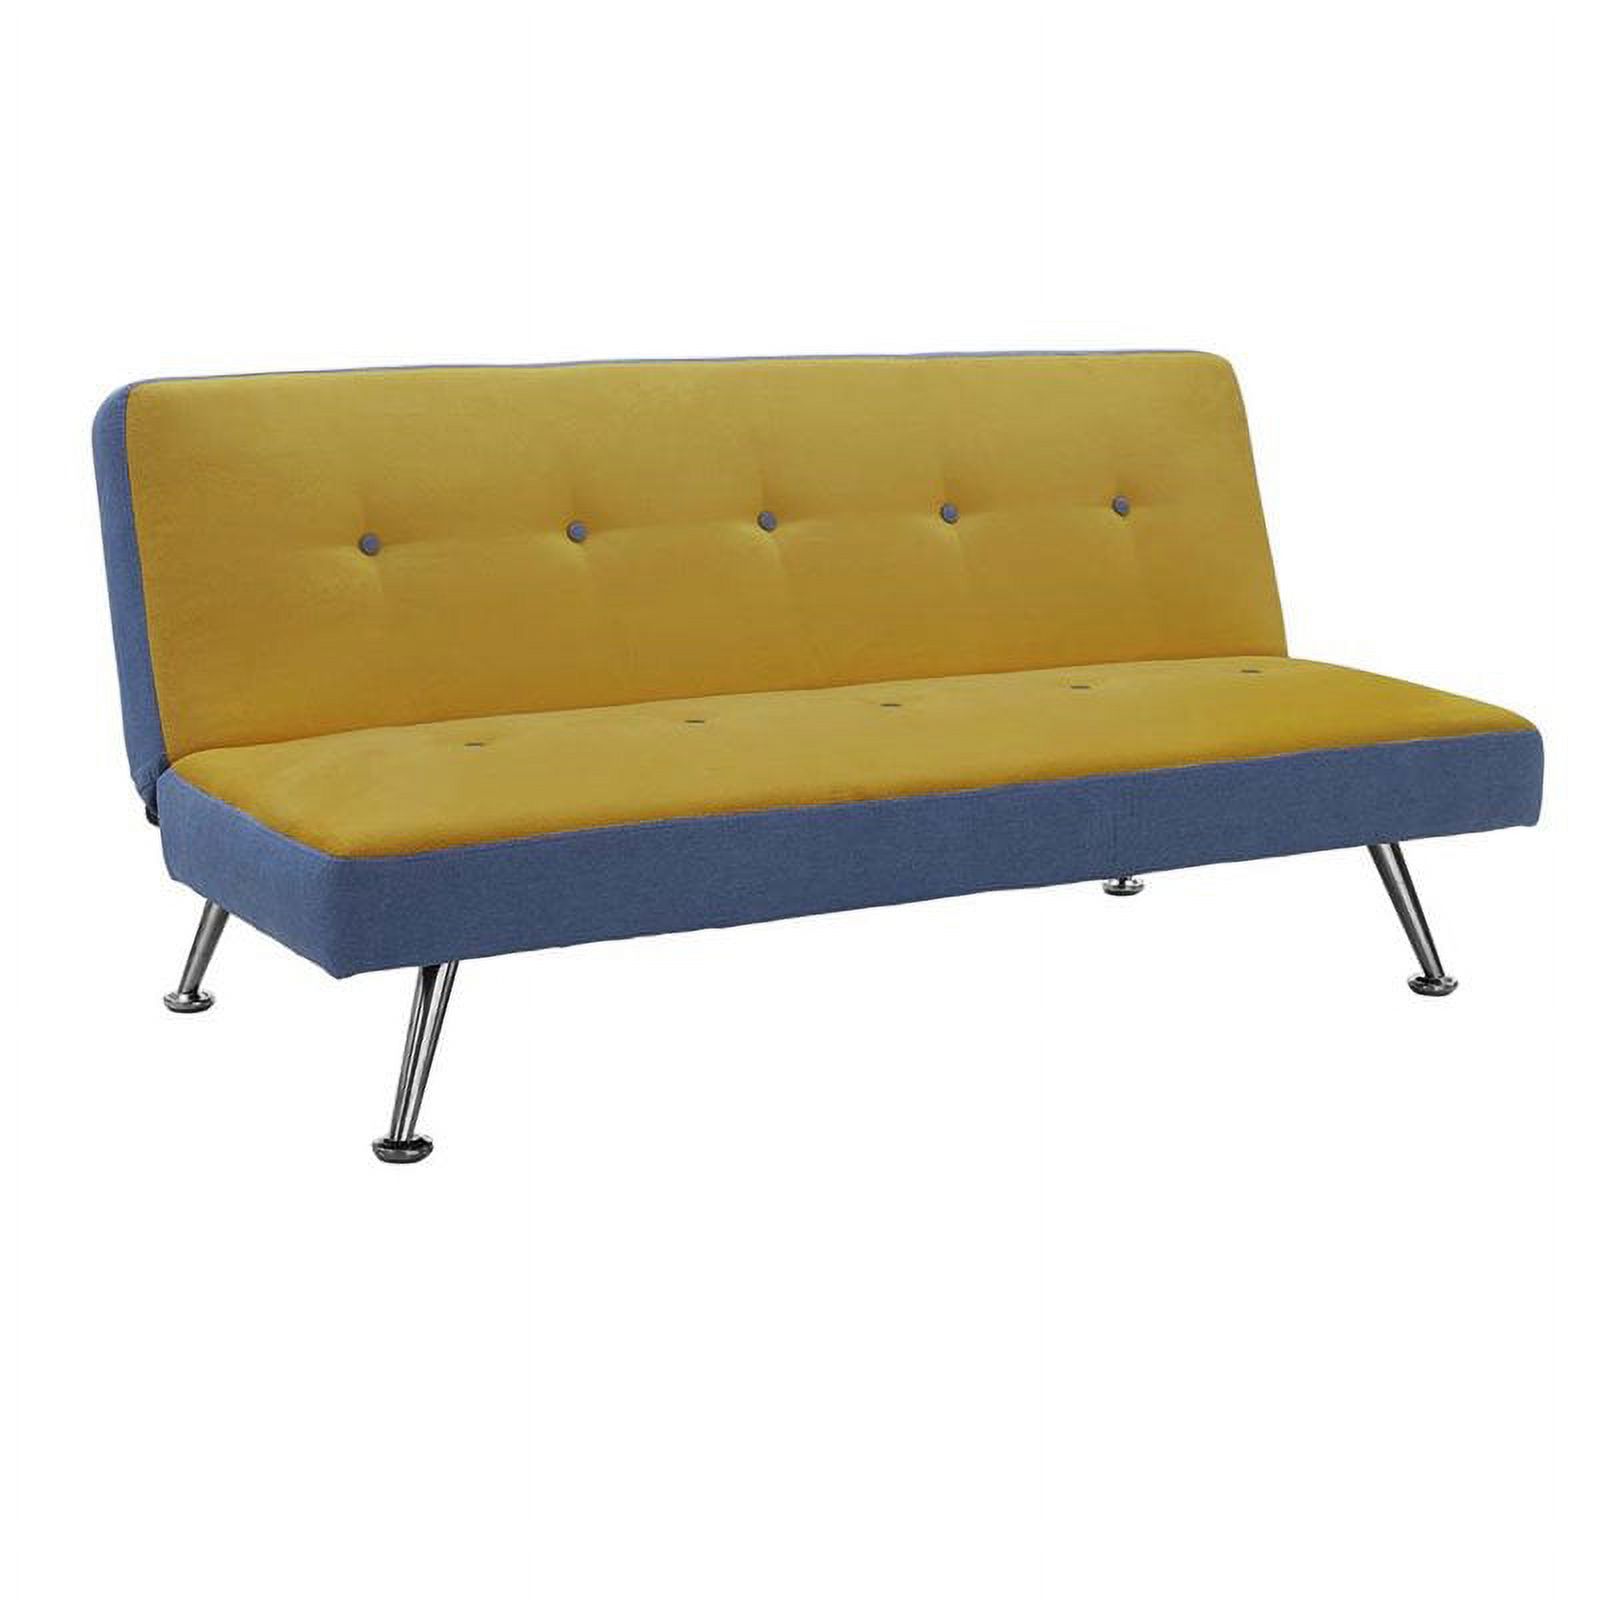 DHP Junior Microfiber Convertible Sofa in Denim and Minion Yellow - image 1 of 9